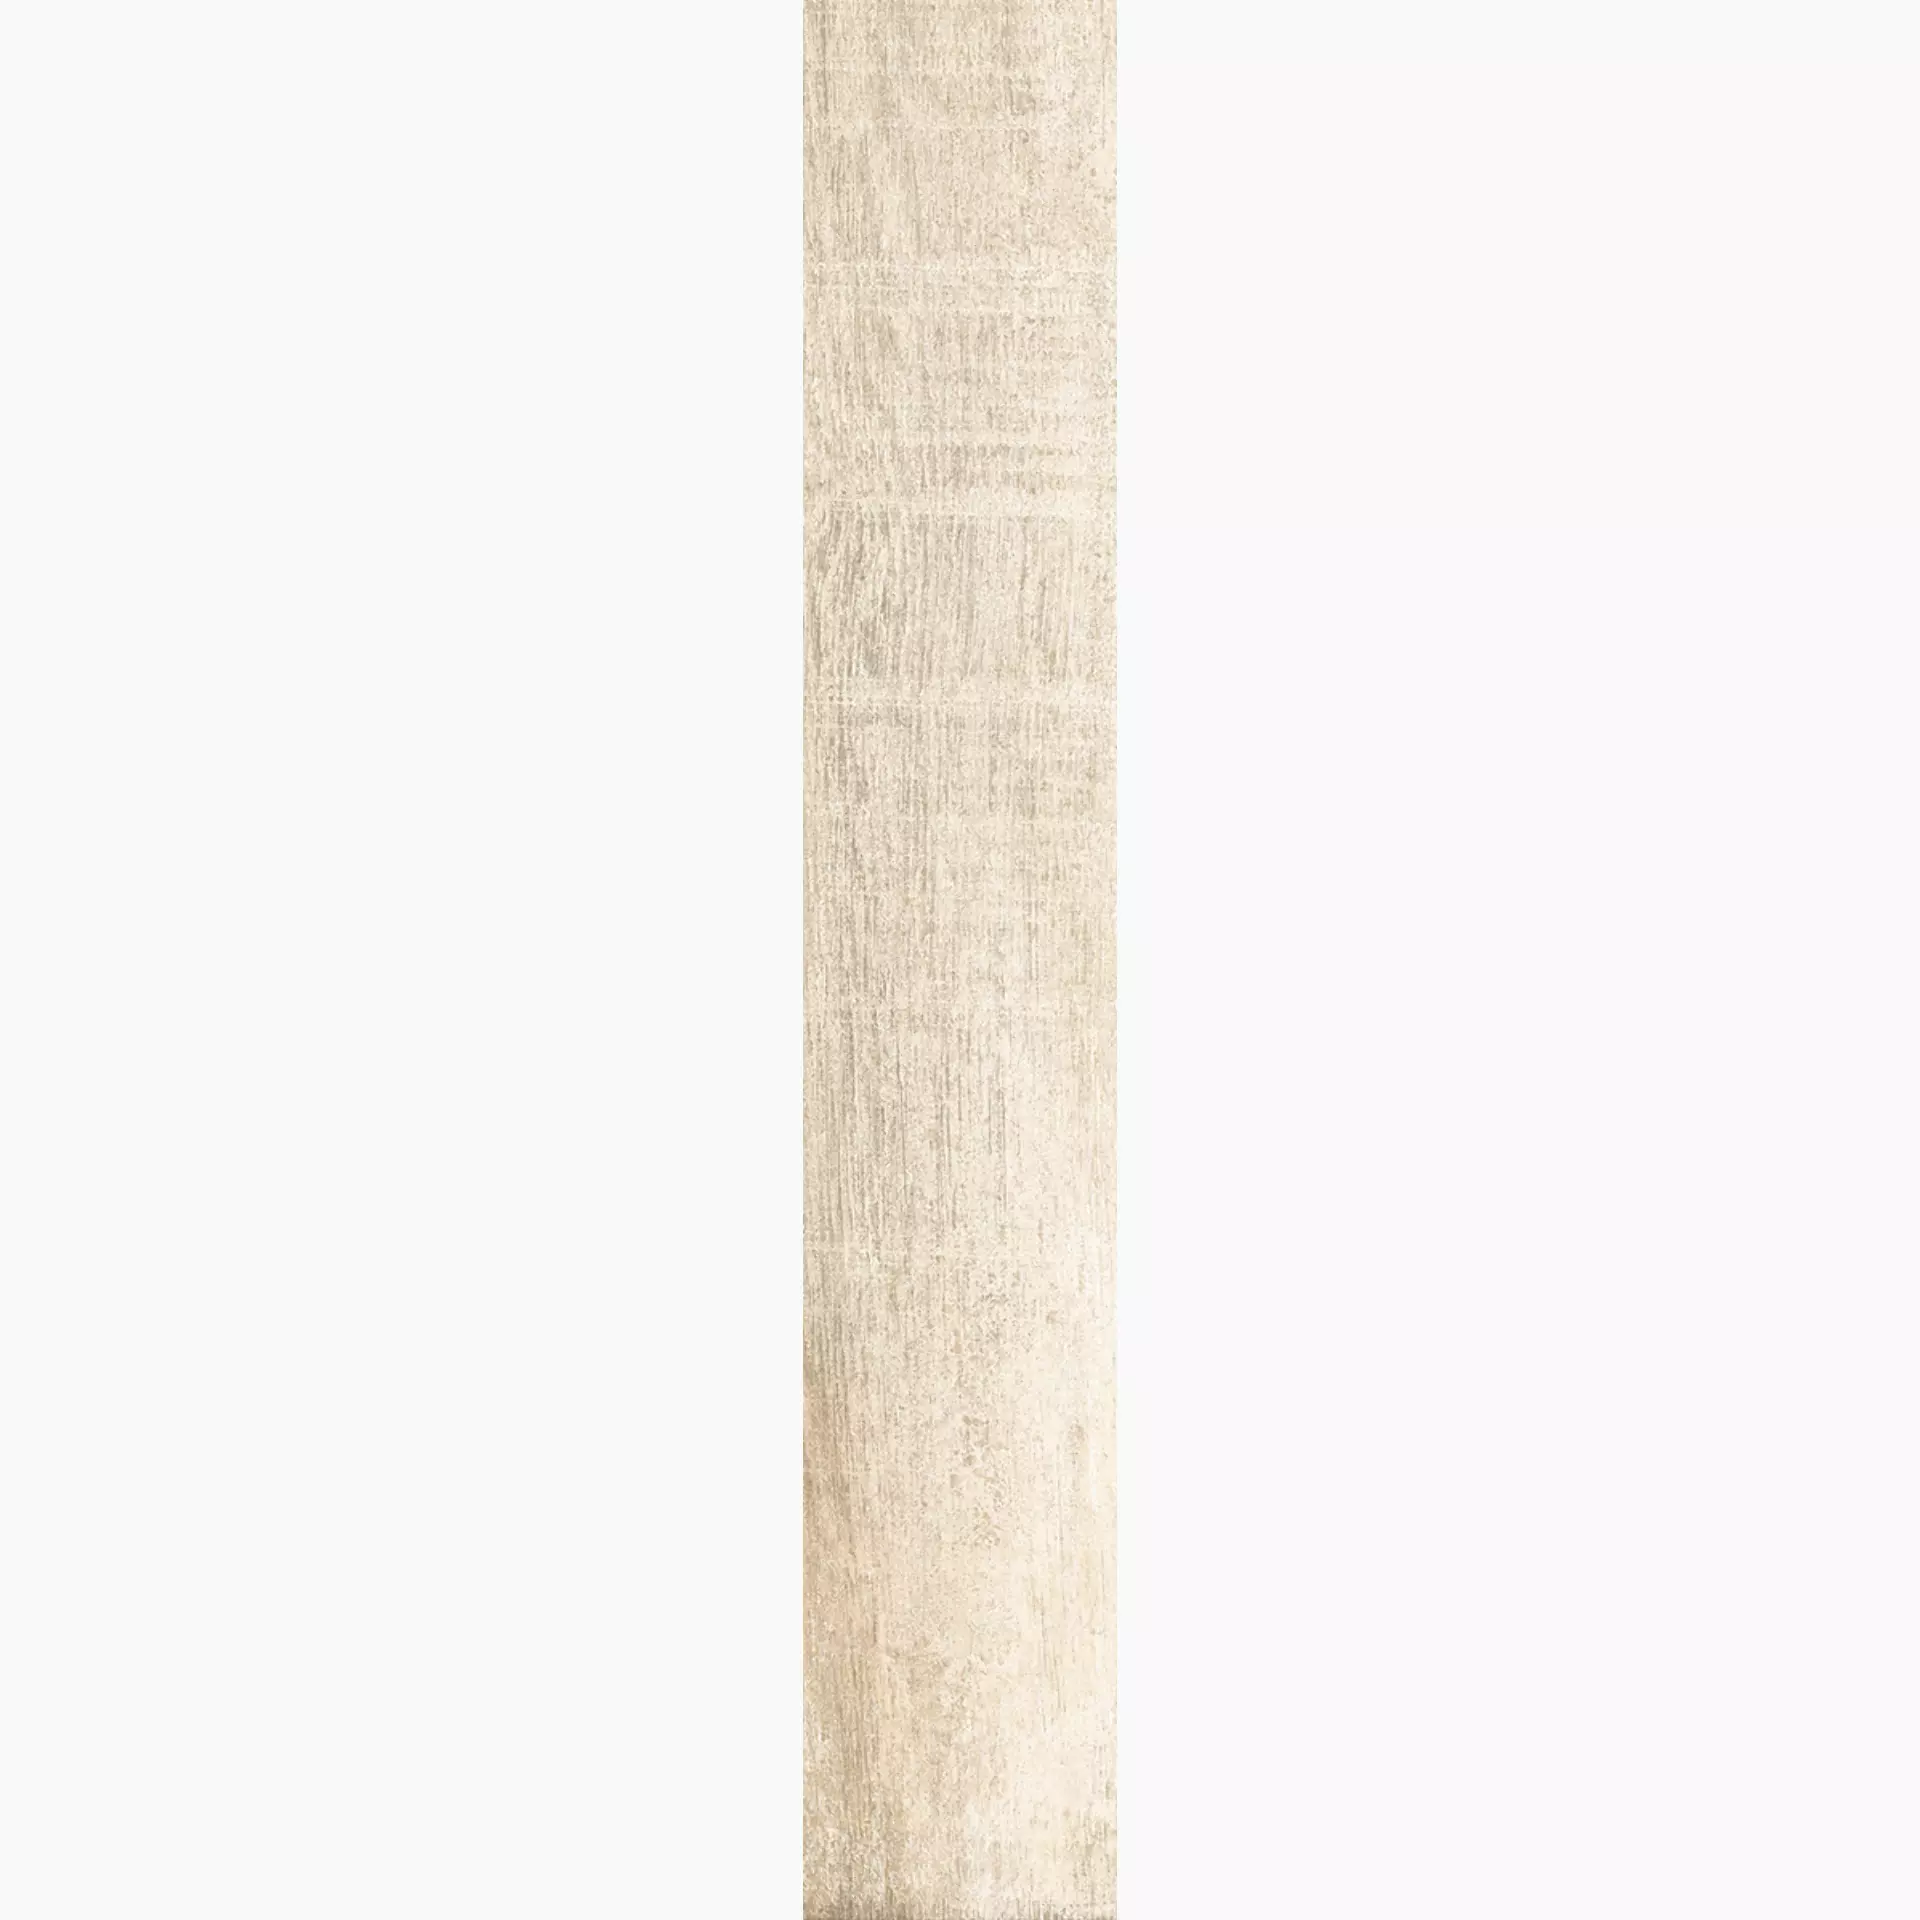 Rondine Greenwood Beige Naturale J86331 7,5x45cm 9,5mm